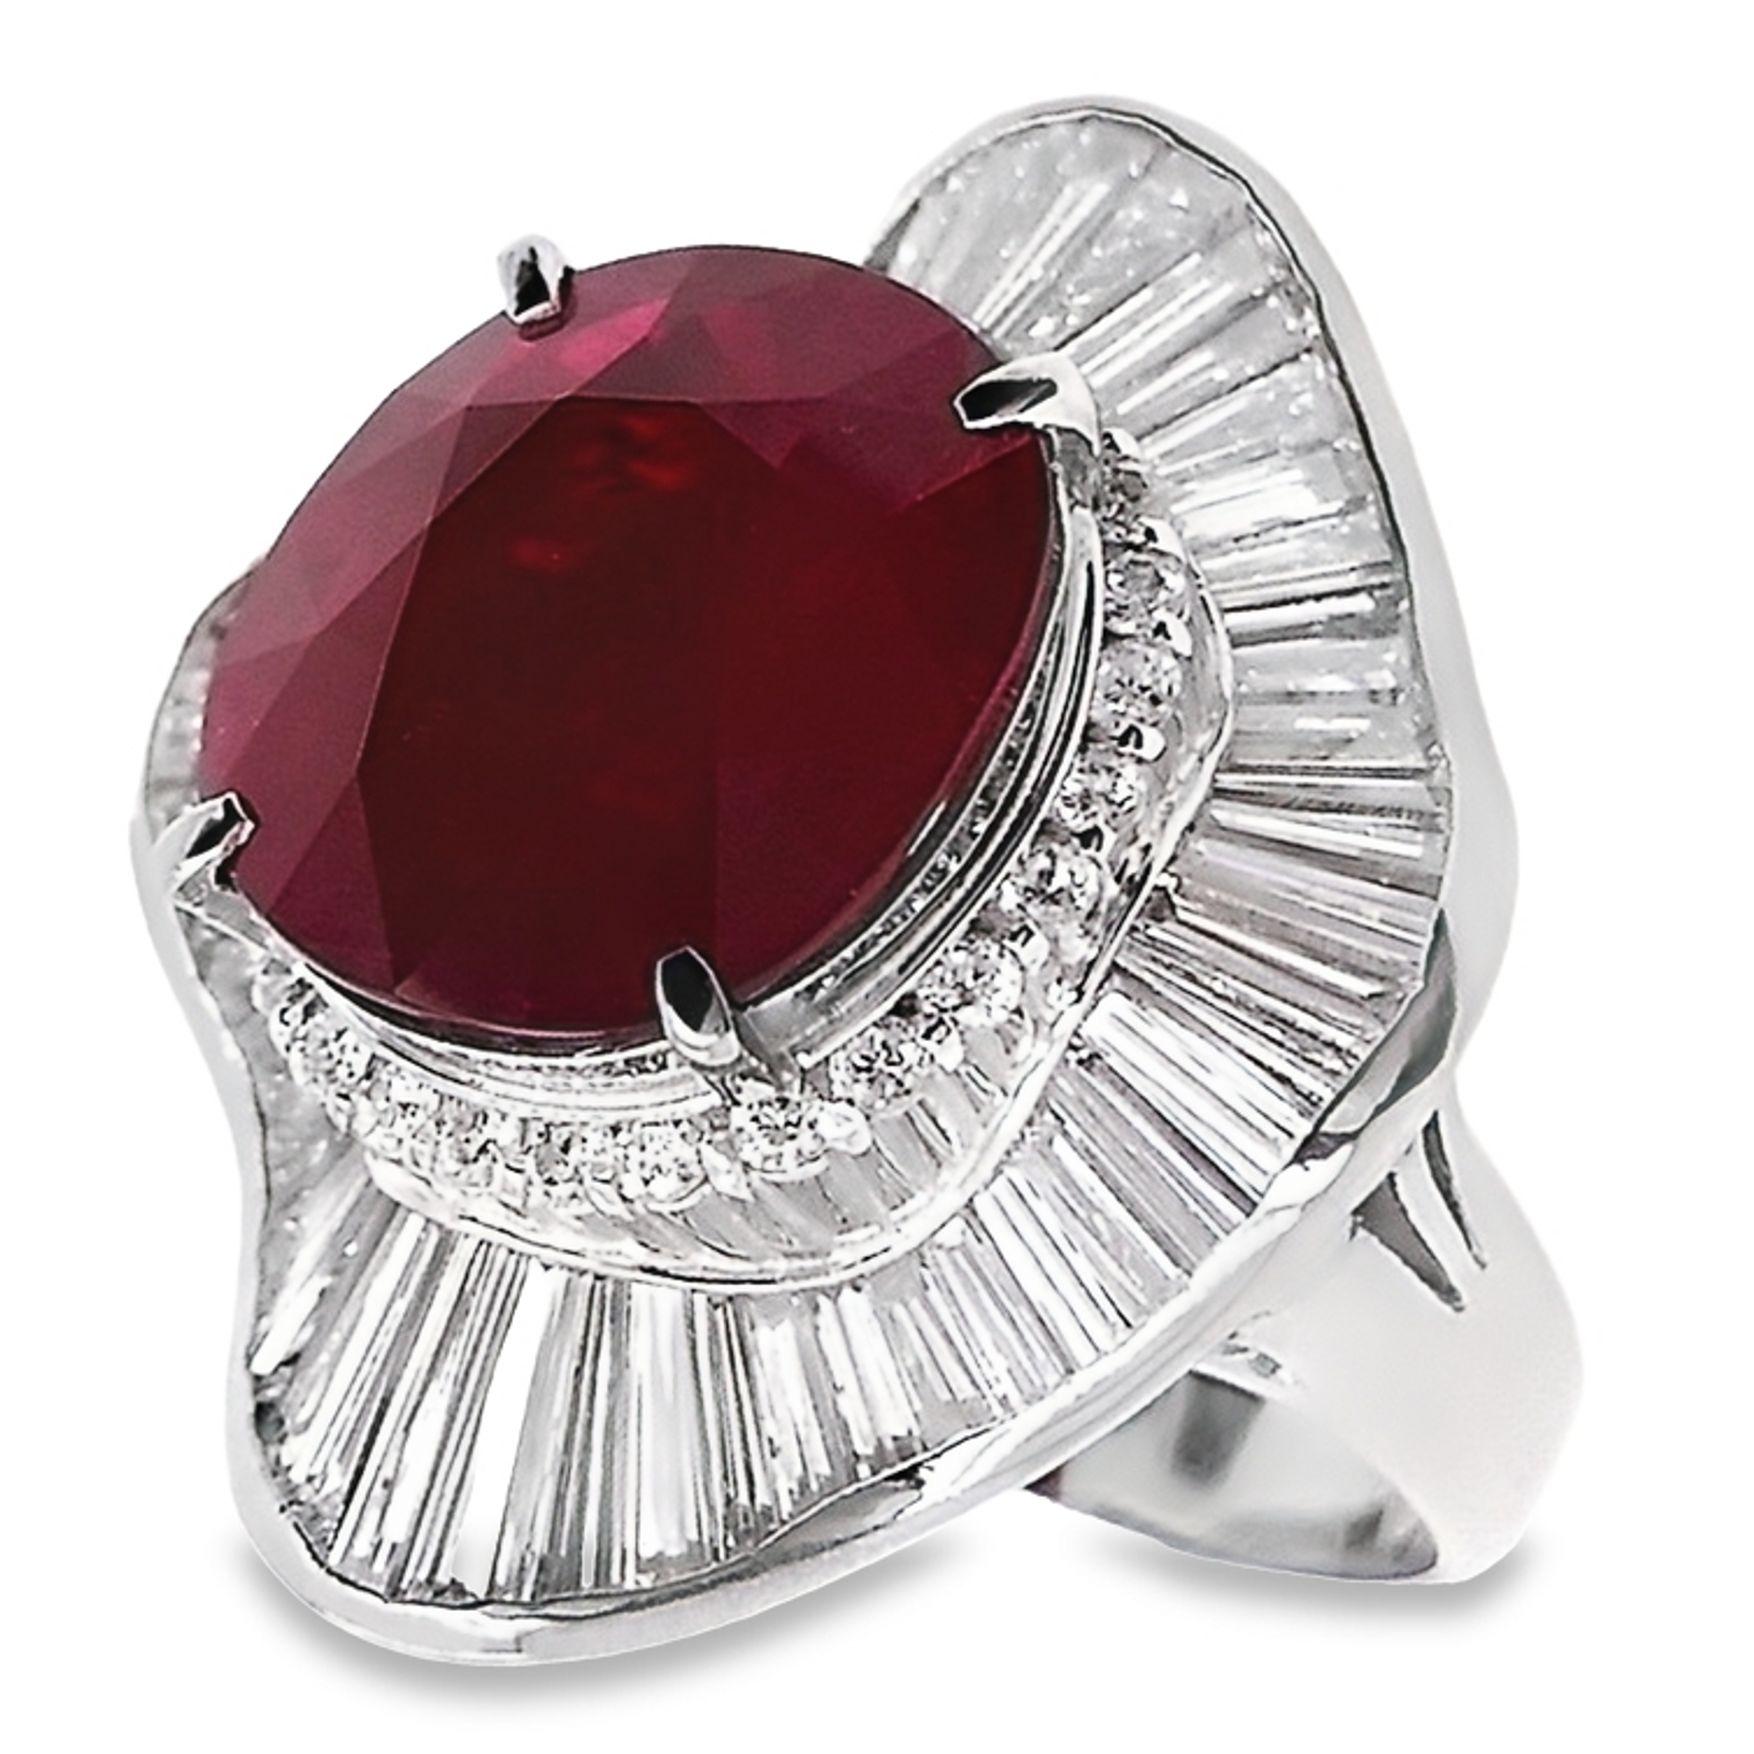 En vente :  Bague en platine certifiée IGI, rubis de Birmanie naturel de 9,39 carats et diamants naturels de 3,93 carats 3